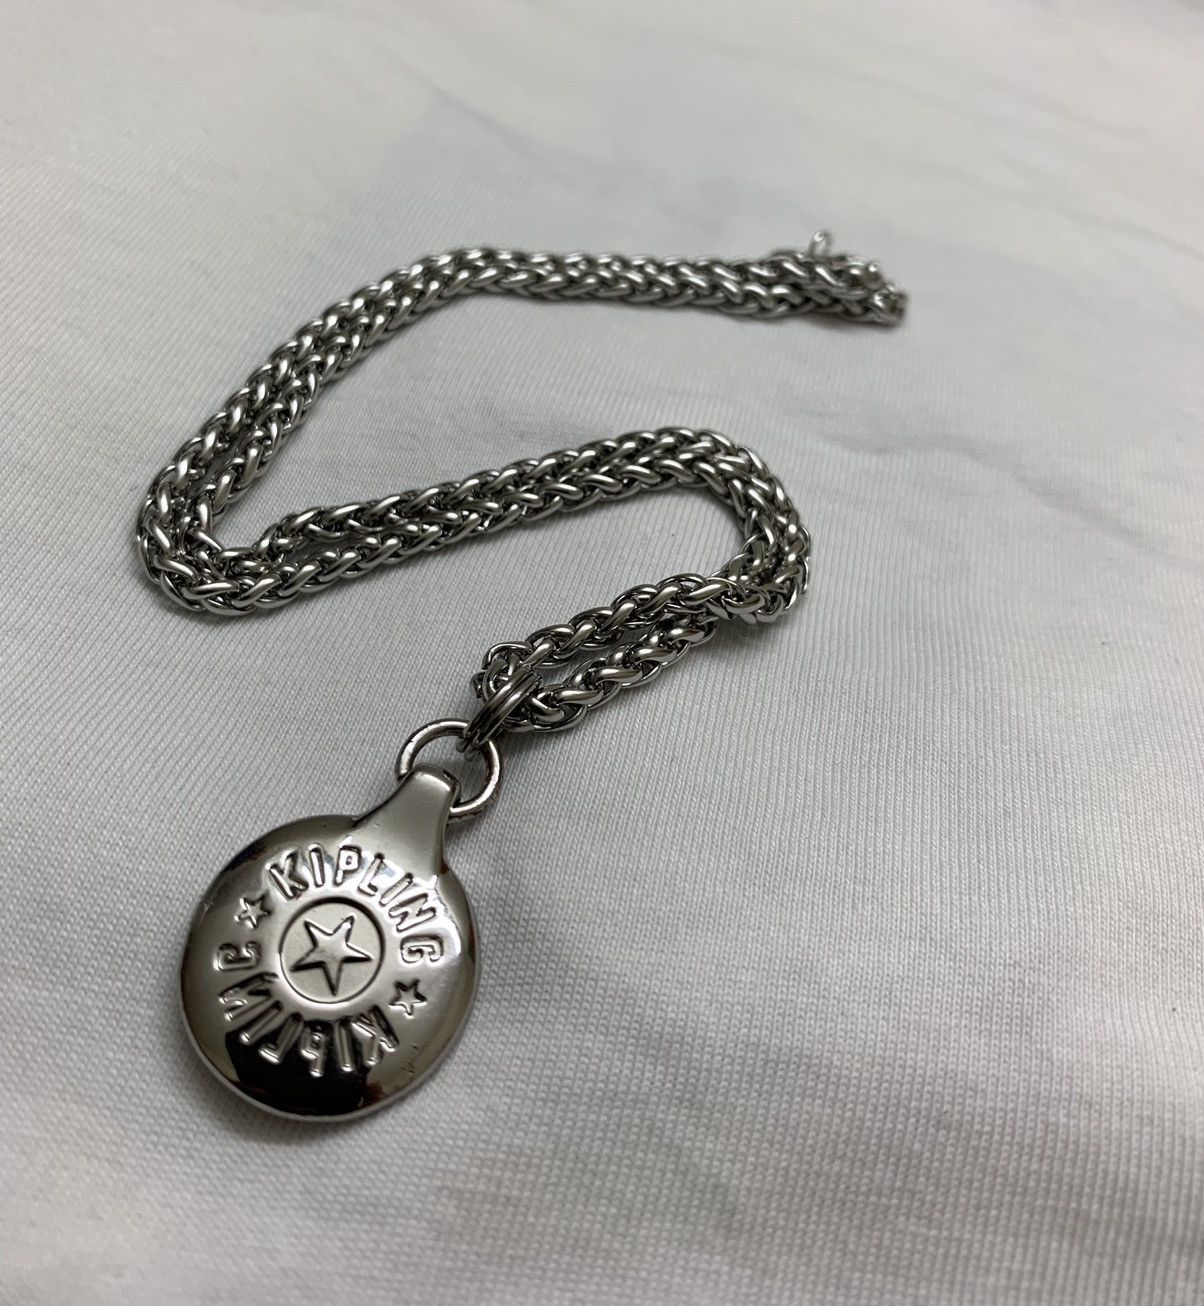 Vintage Kipling Pendant Repurposed Necklace Chain - 2